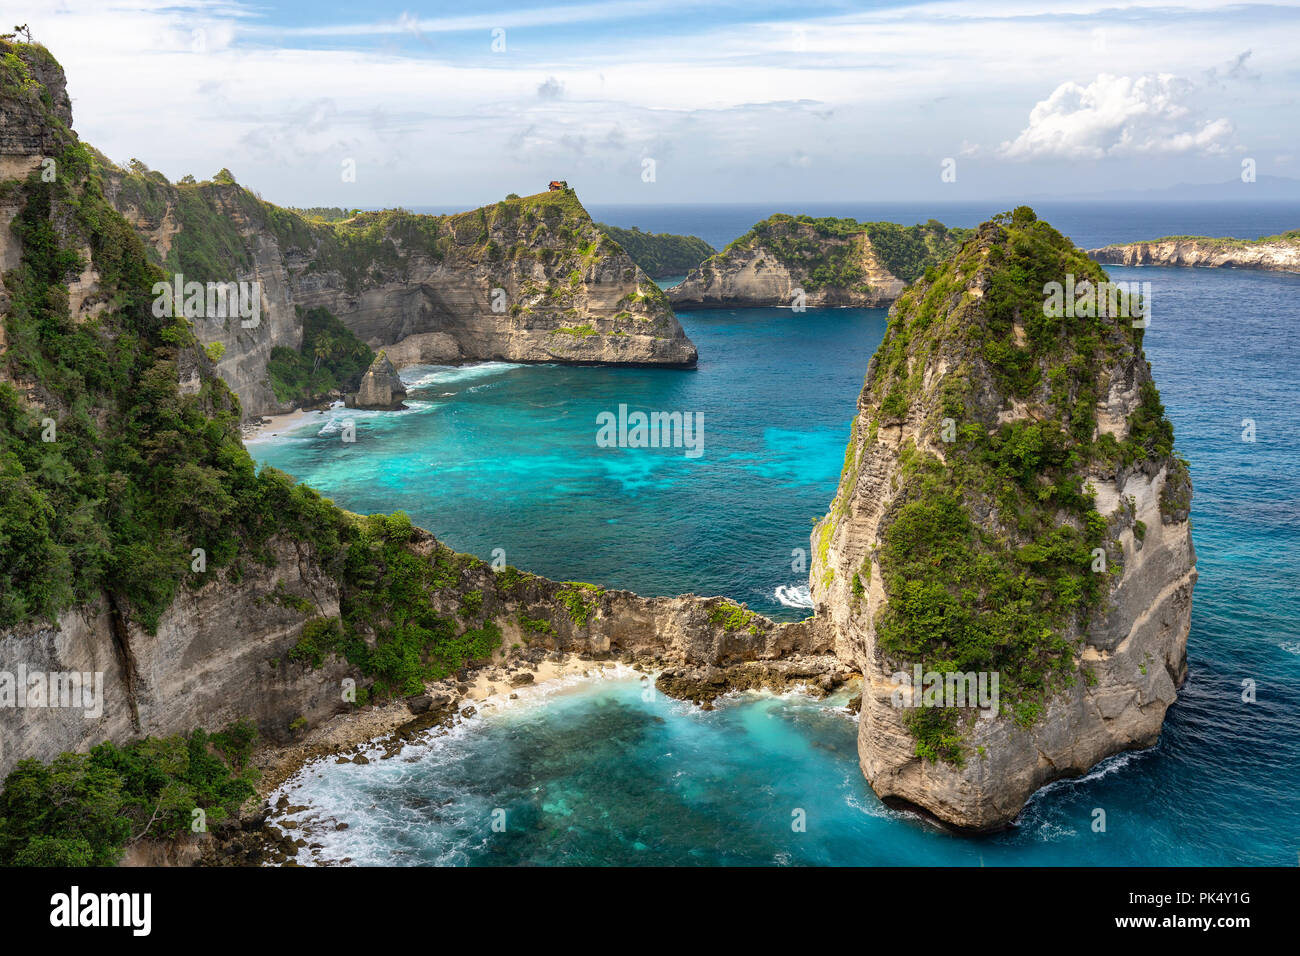 The Raja Lima or Five Kings, islands just off the coast of Nusa Penida, Indonesia. Stock Photo